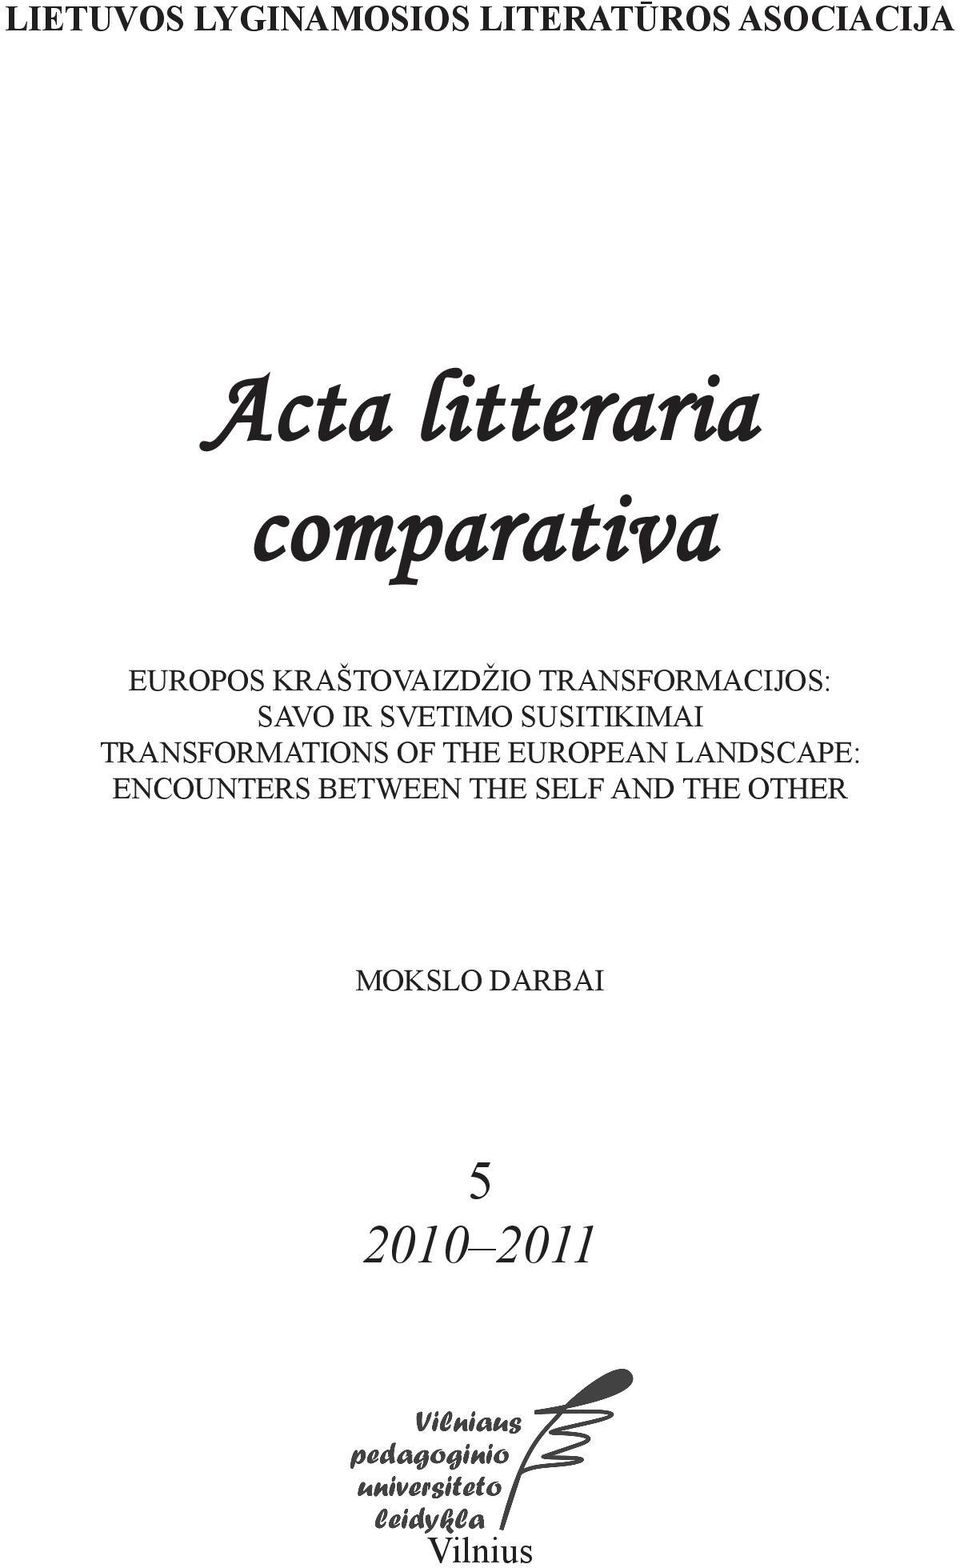 SVETIMO SUSITIKIMAI TRANSFORMATIONS OF THE EUROPEAN LANDSCAPE: